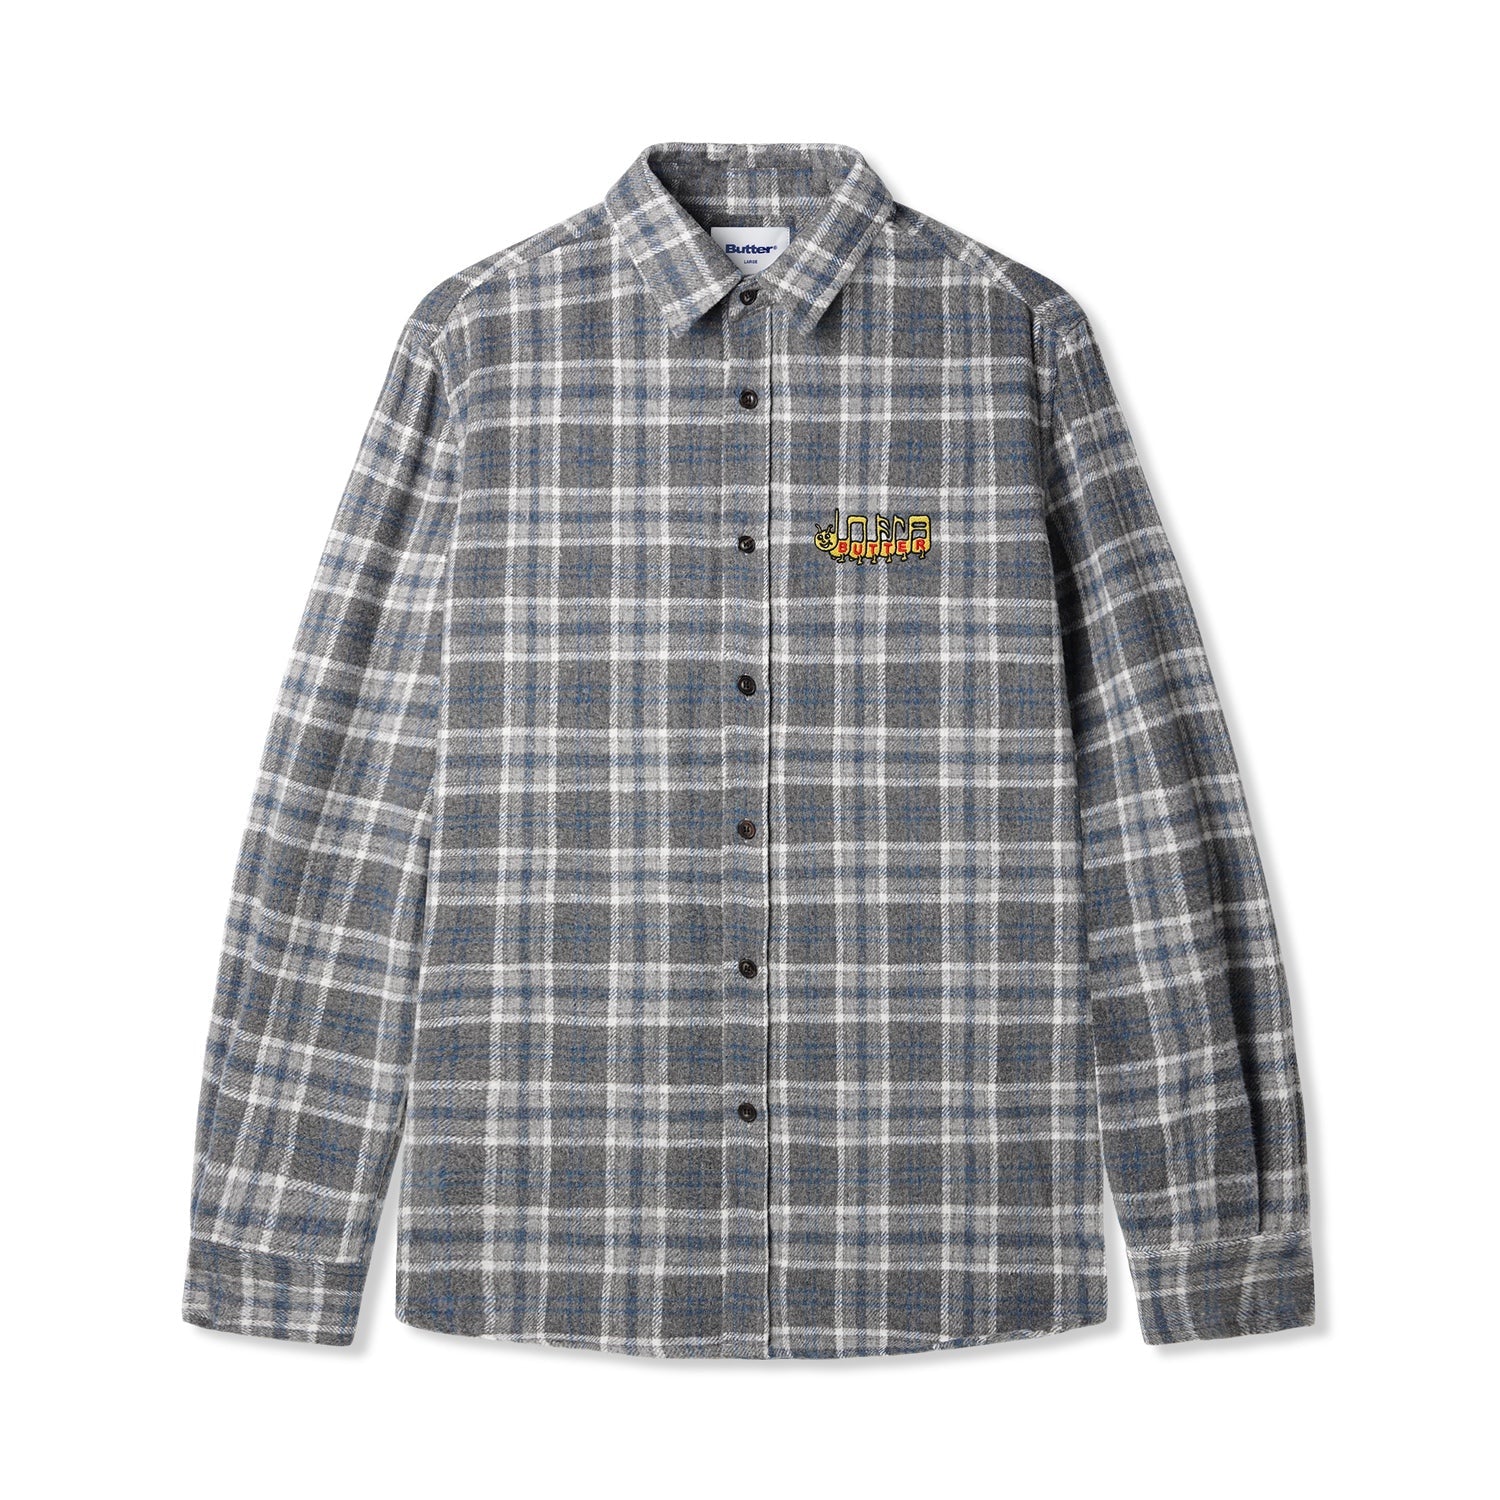 Caterpillar Flannel Shirt, Grey / Slate